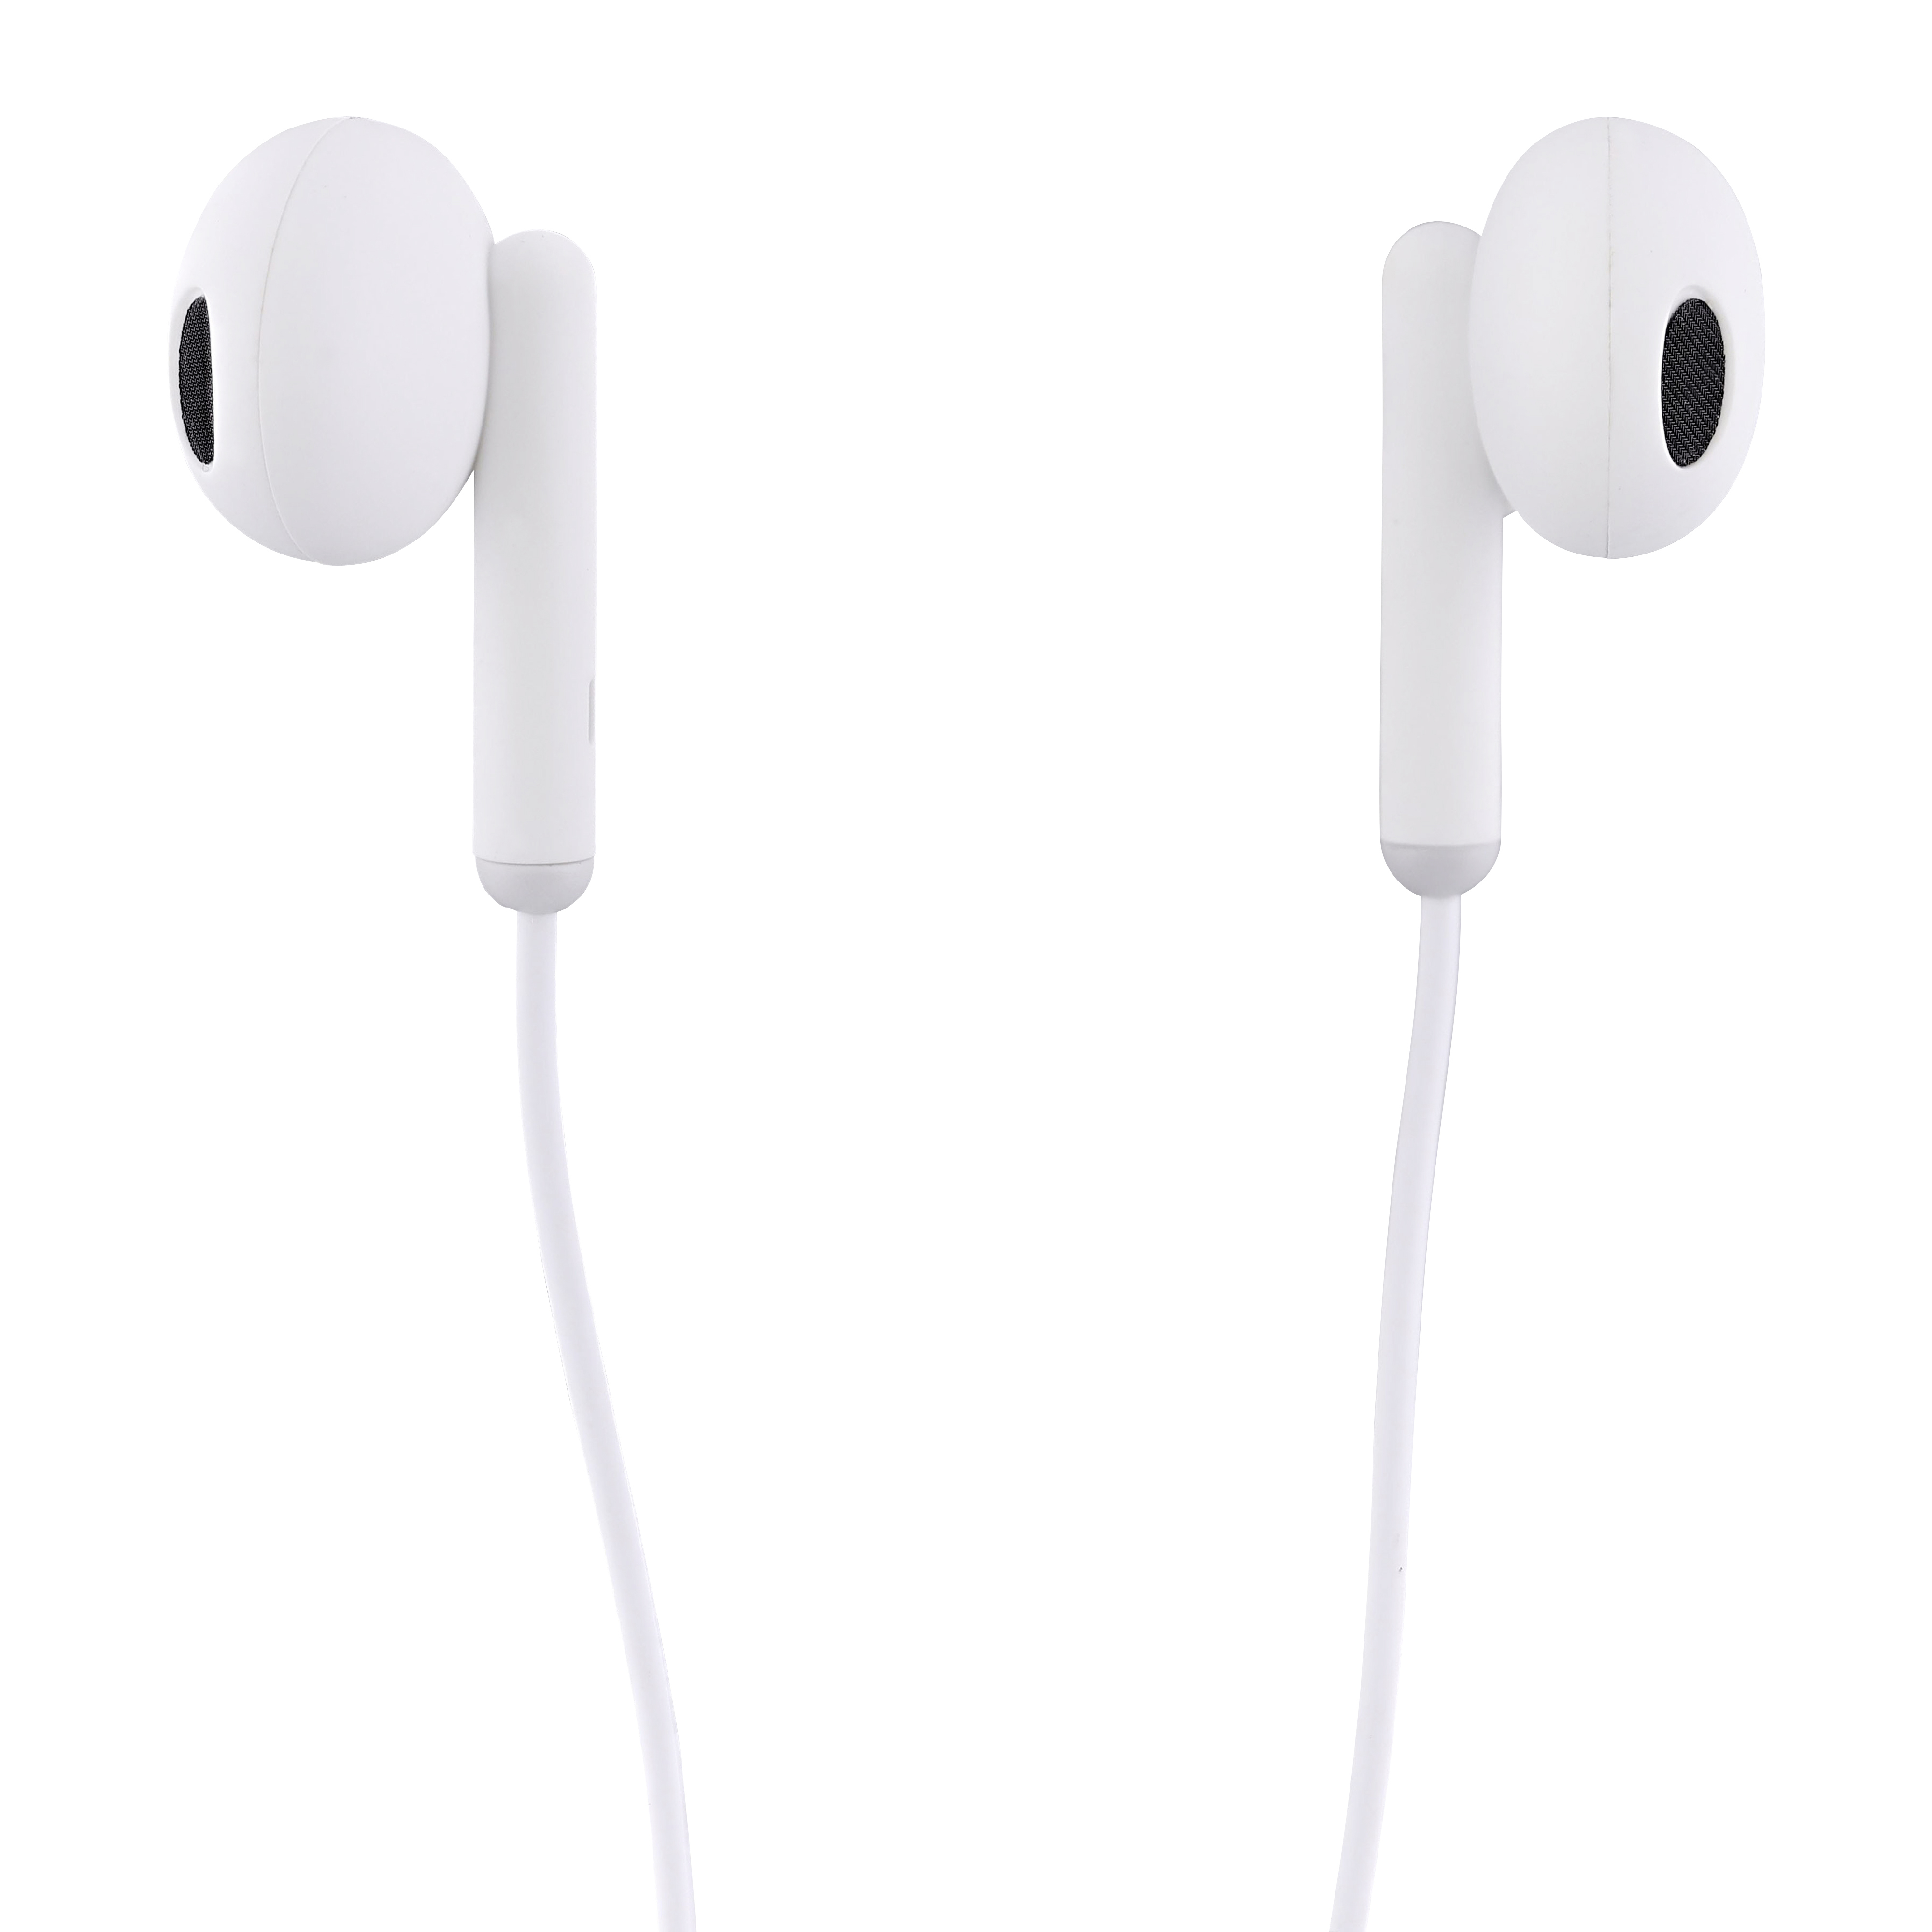 Ecouteurs filaire semi intra-auriculaires USB-C WAY blanc pas cher